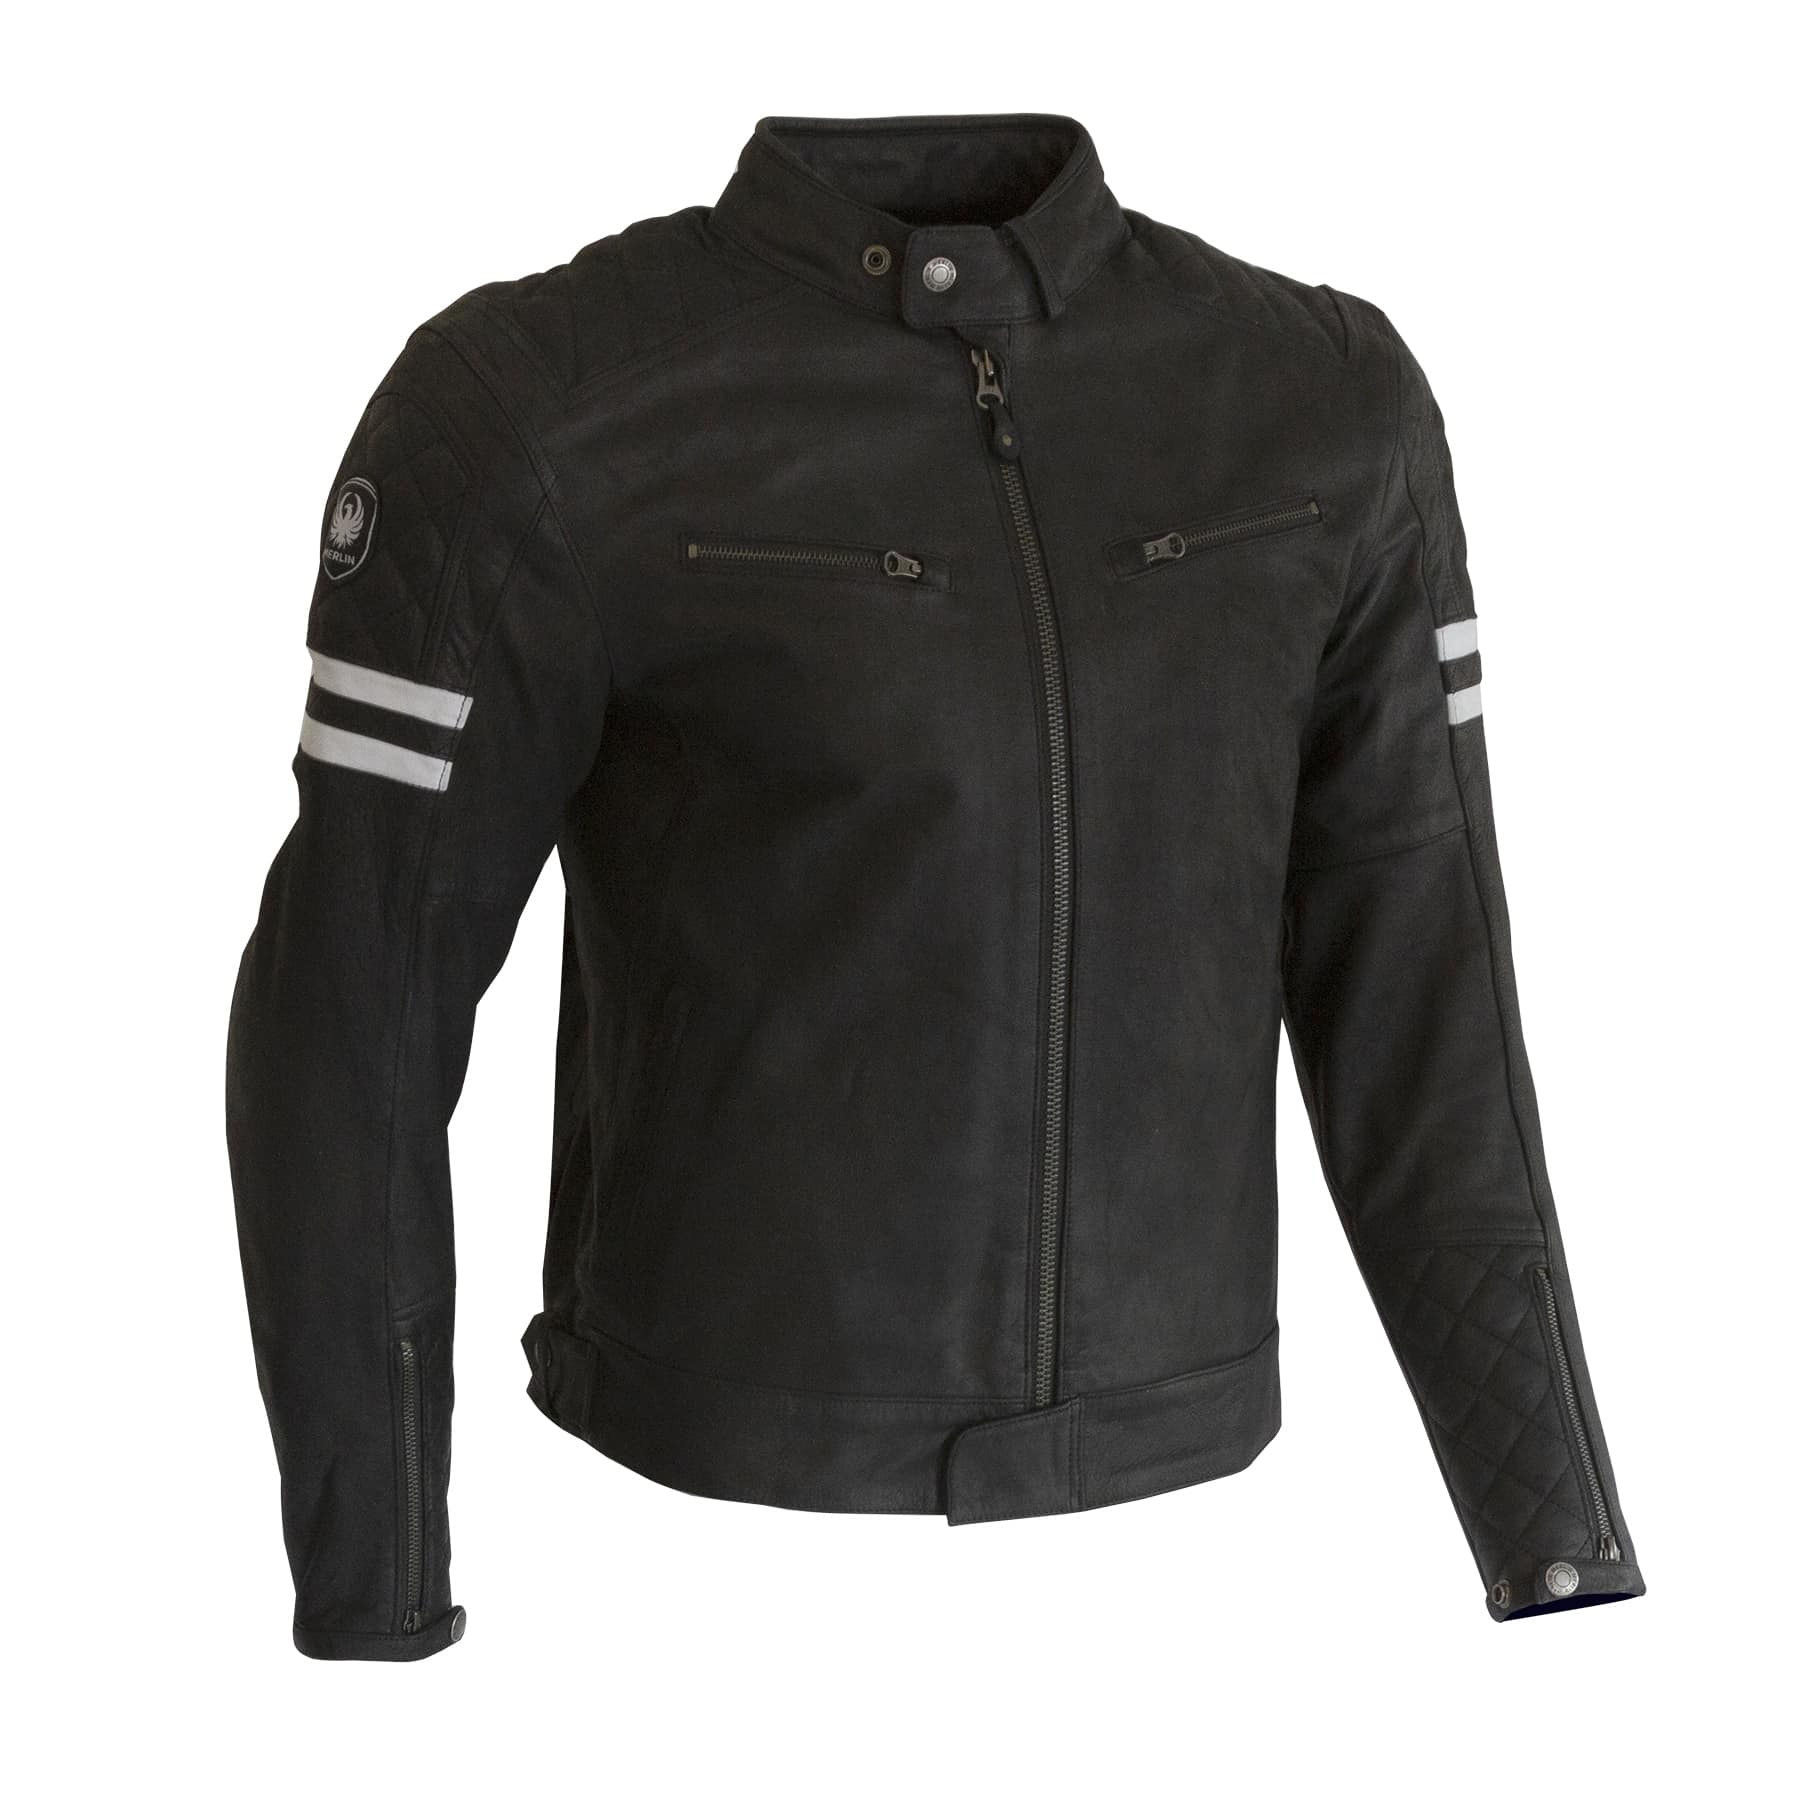 Merlin Hixon II jacket in black